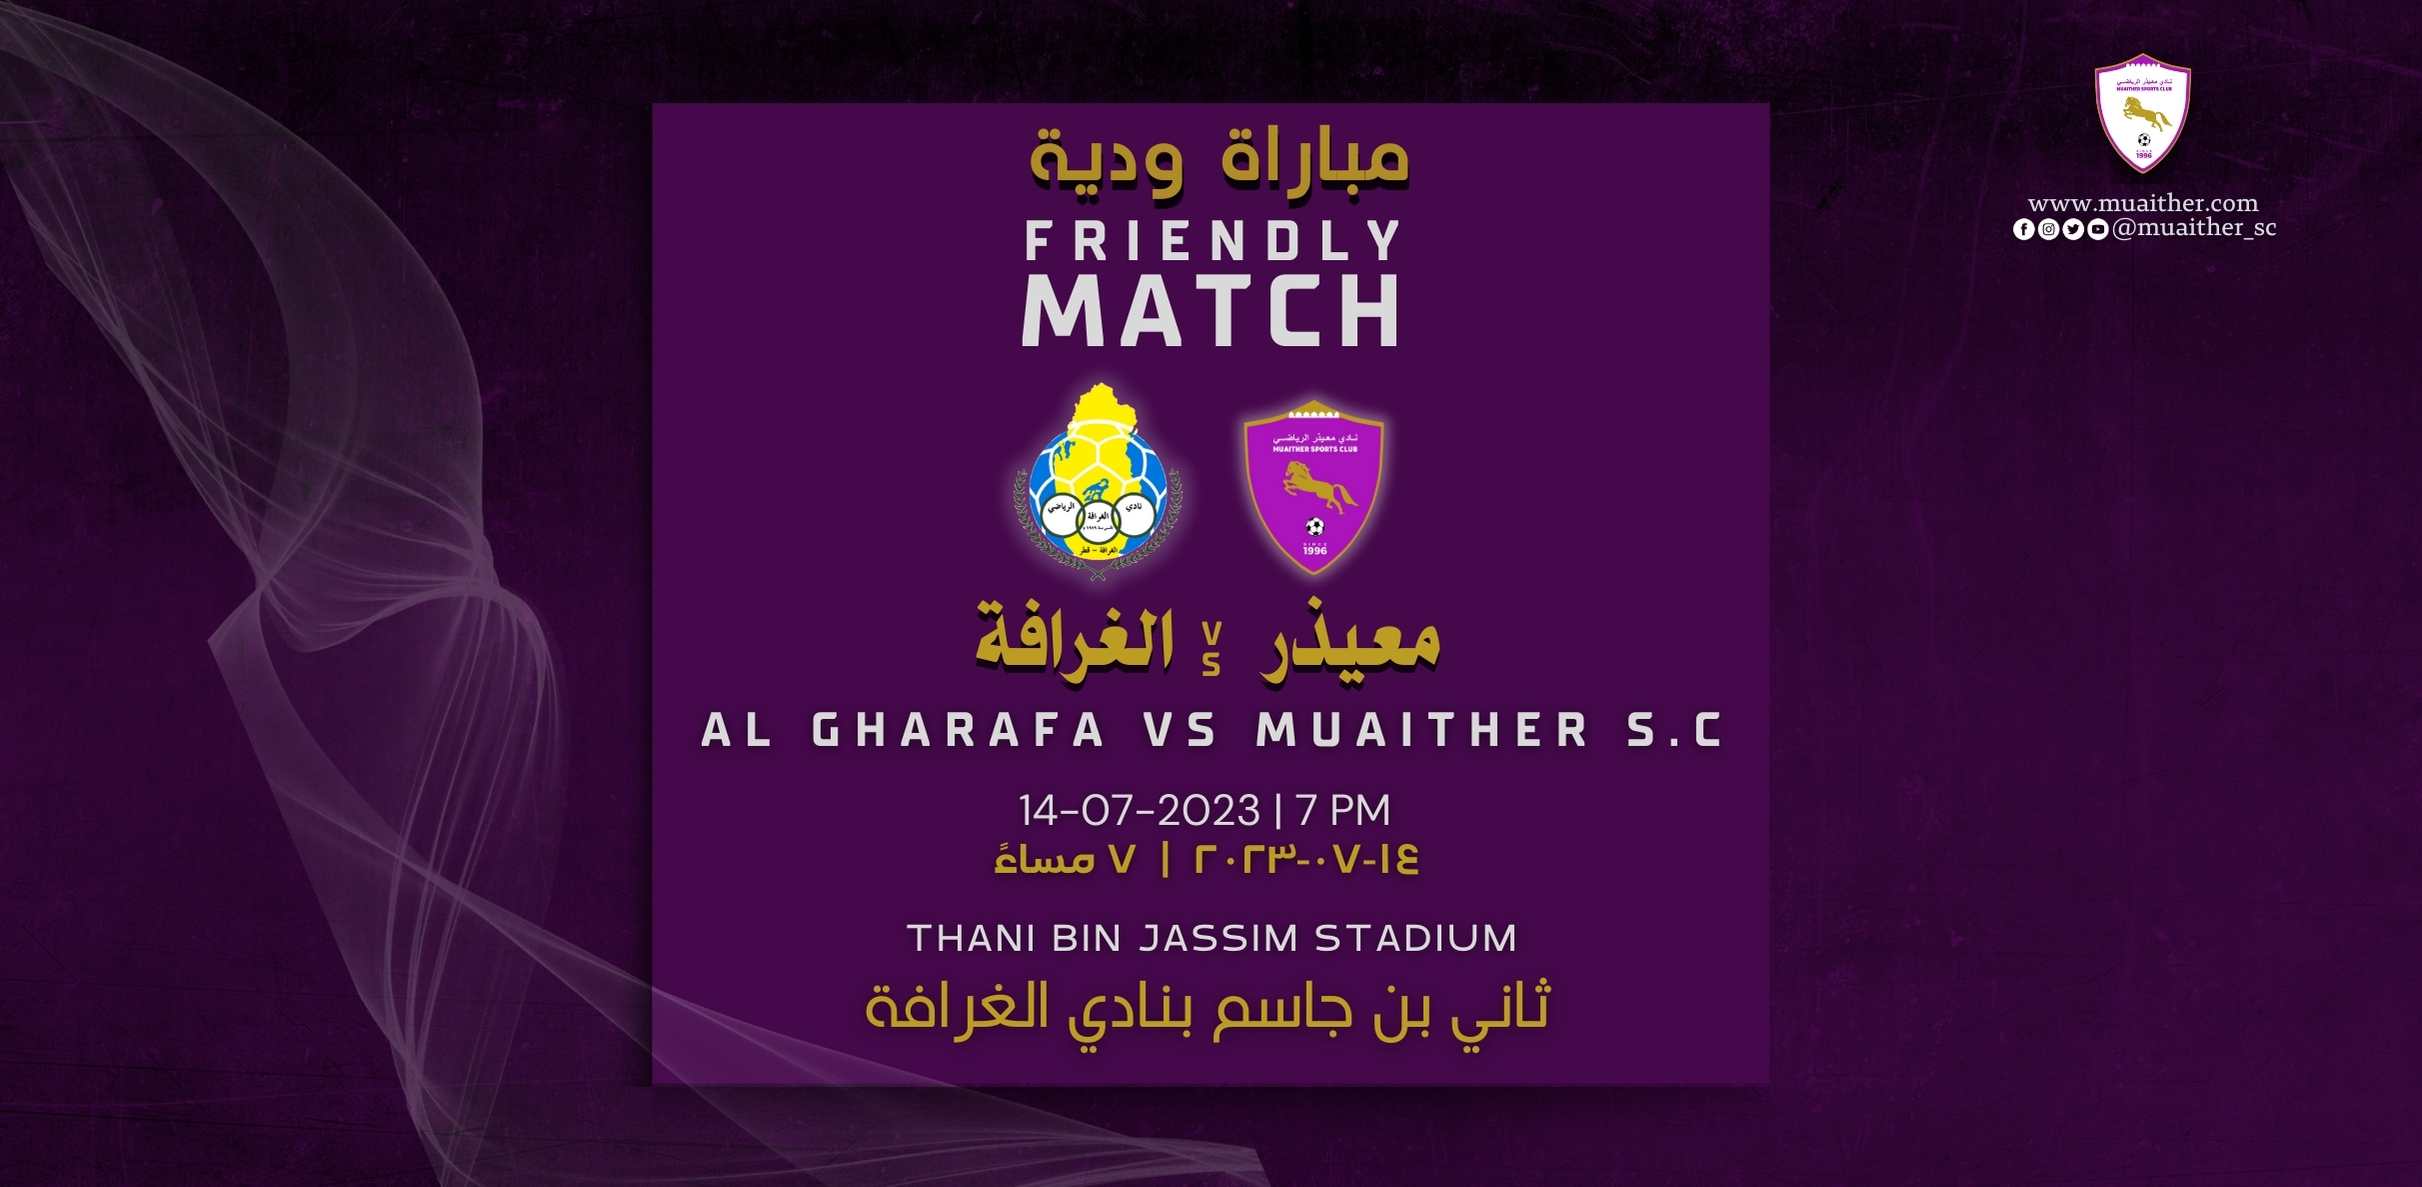 Muaither to face Al Gharafa for a friendly match on Friday